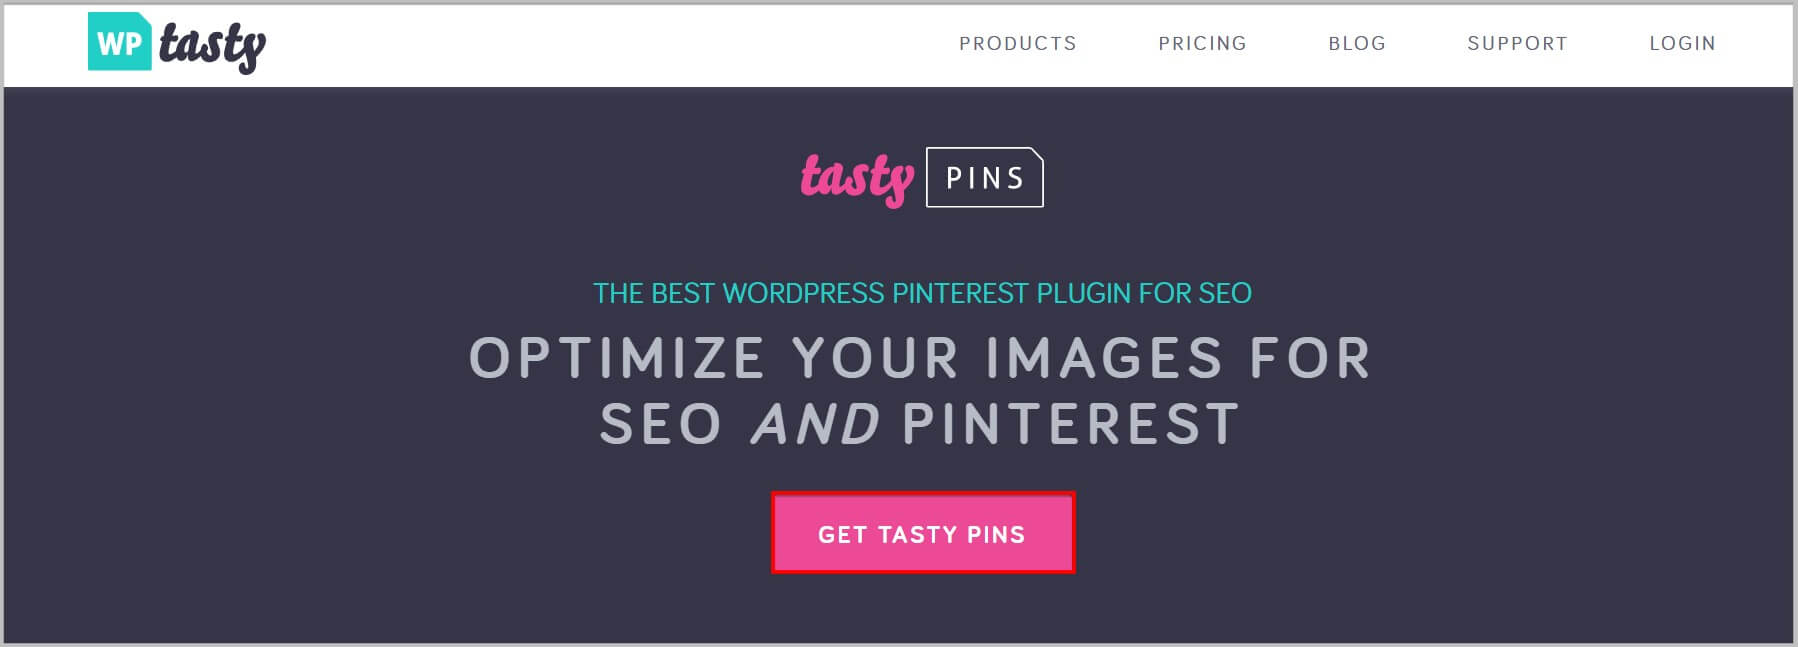 WP Tasty Pins plugin landing page